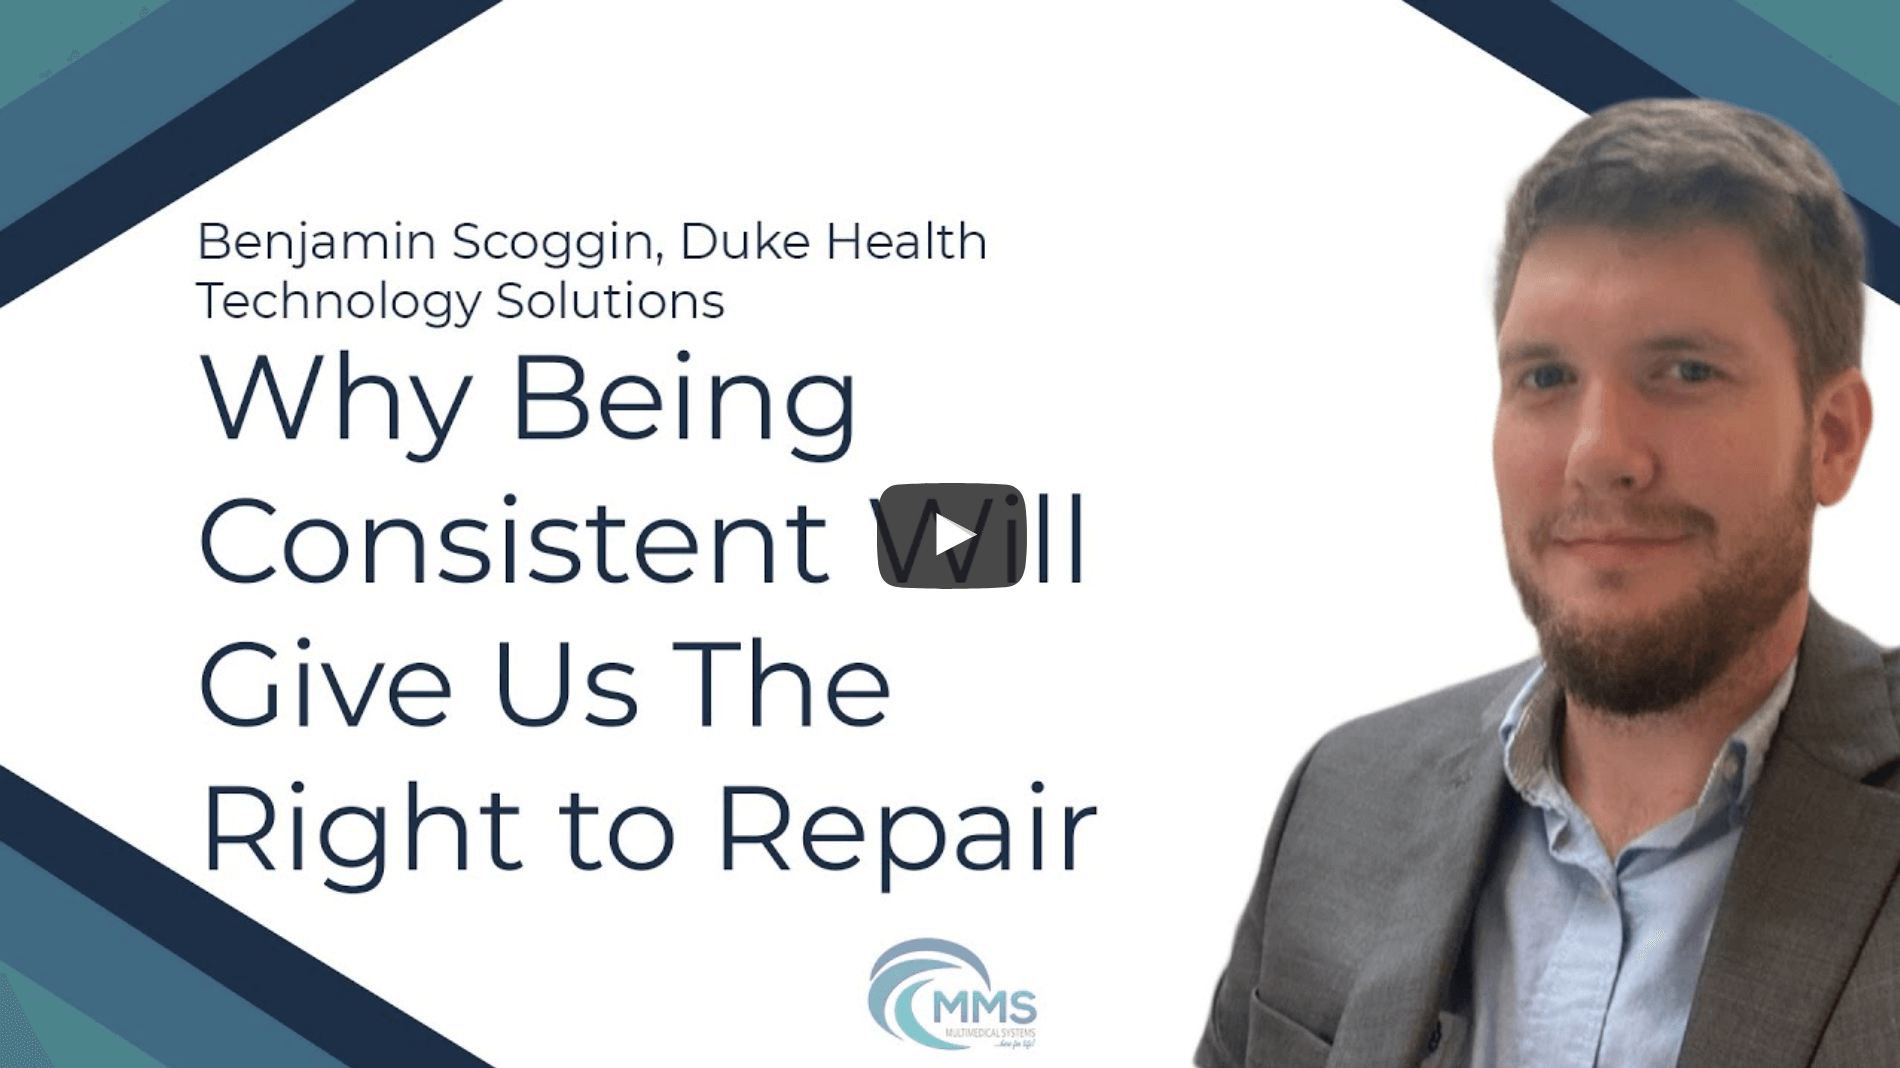 Ben Scoggin Duke Health Solutions